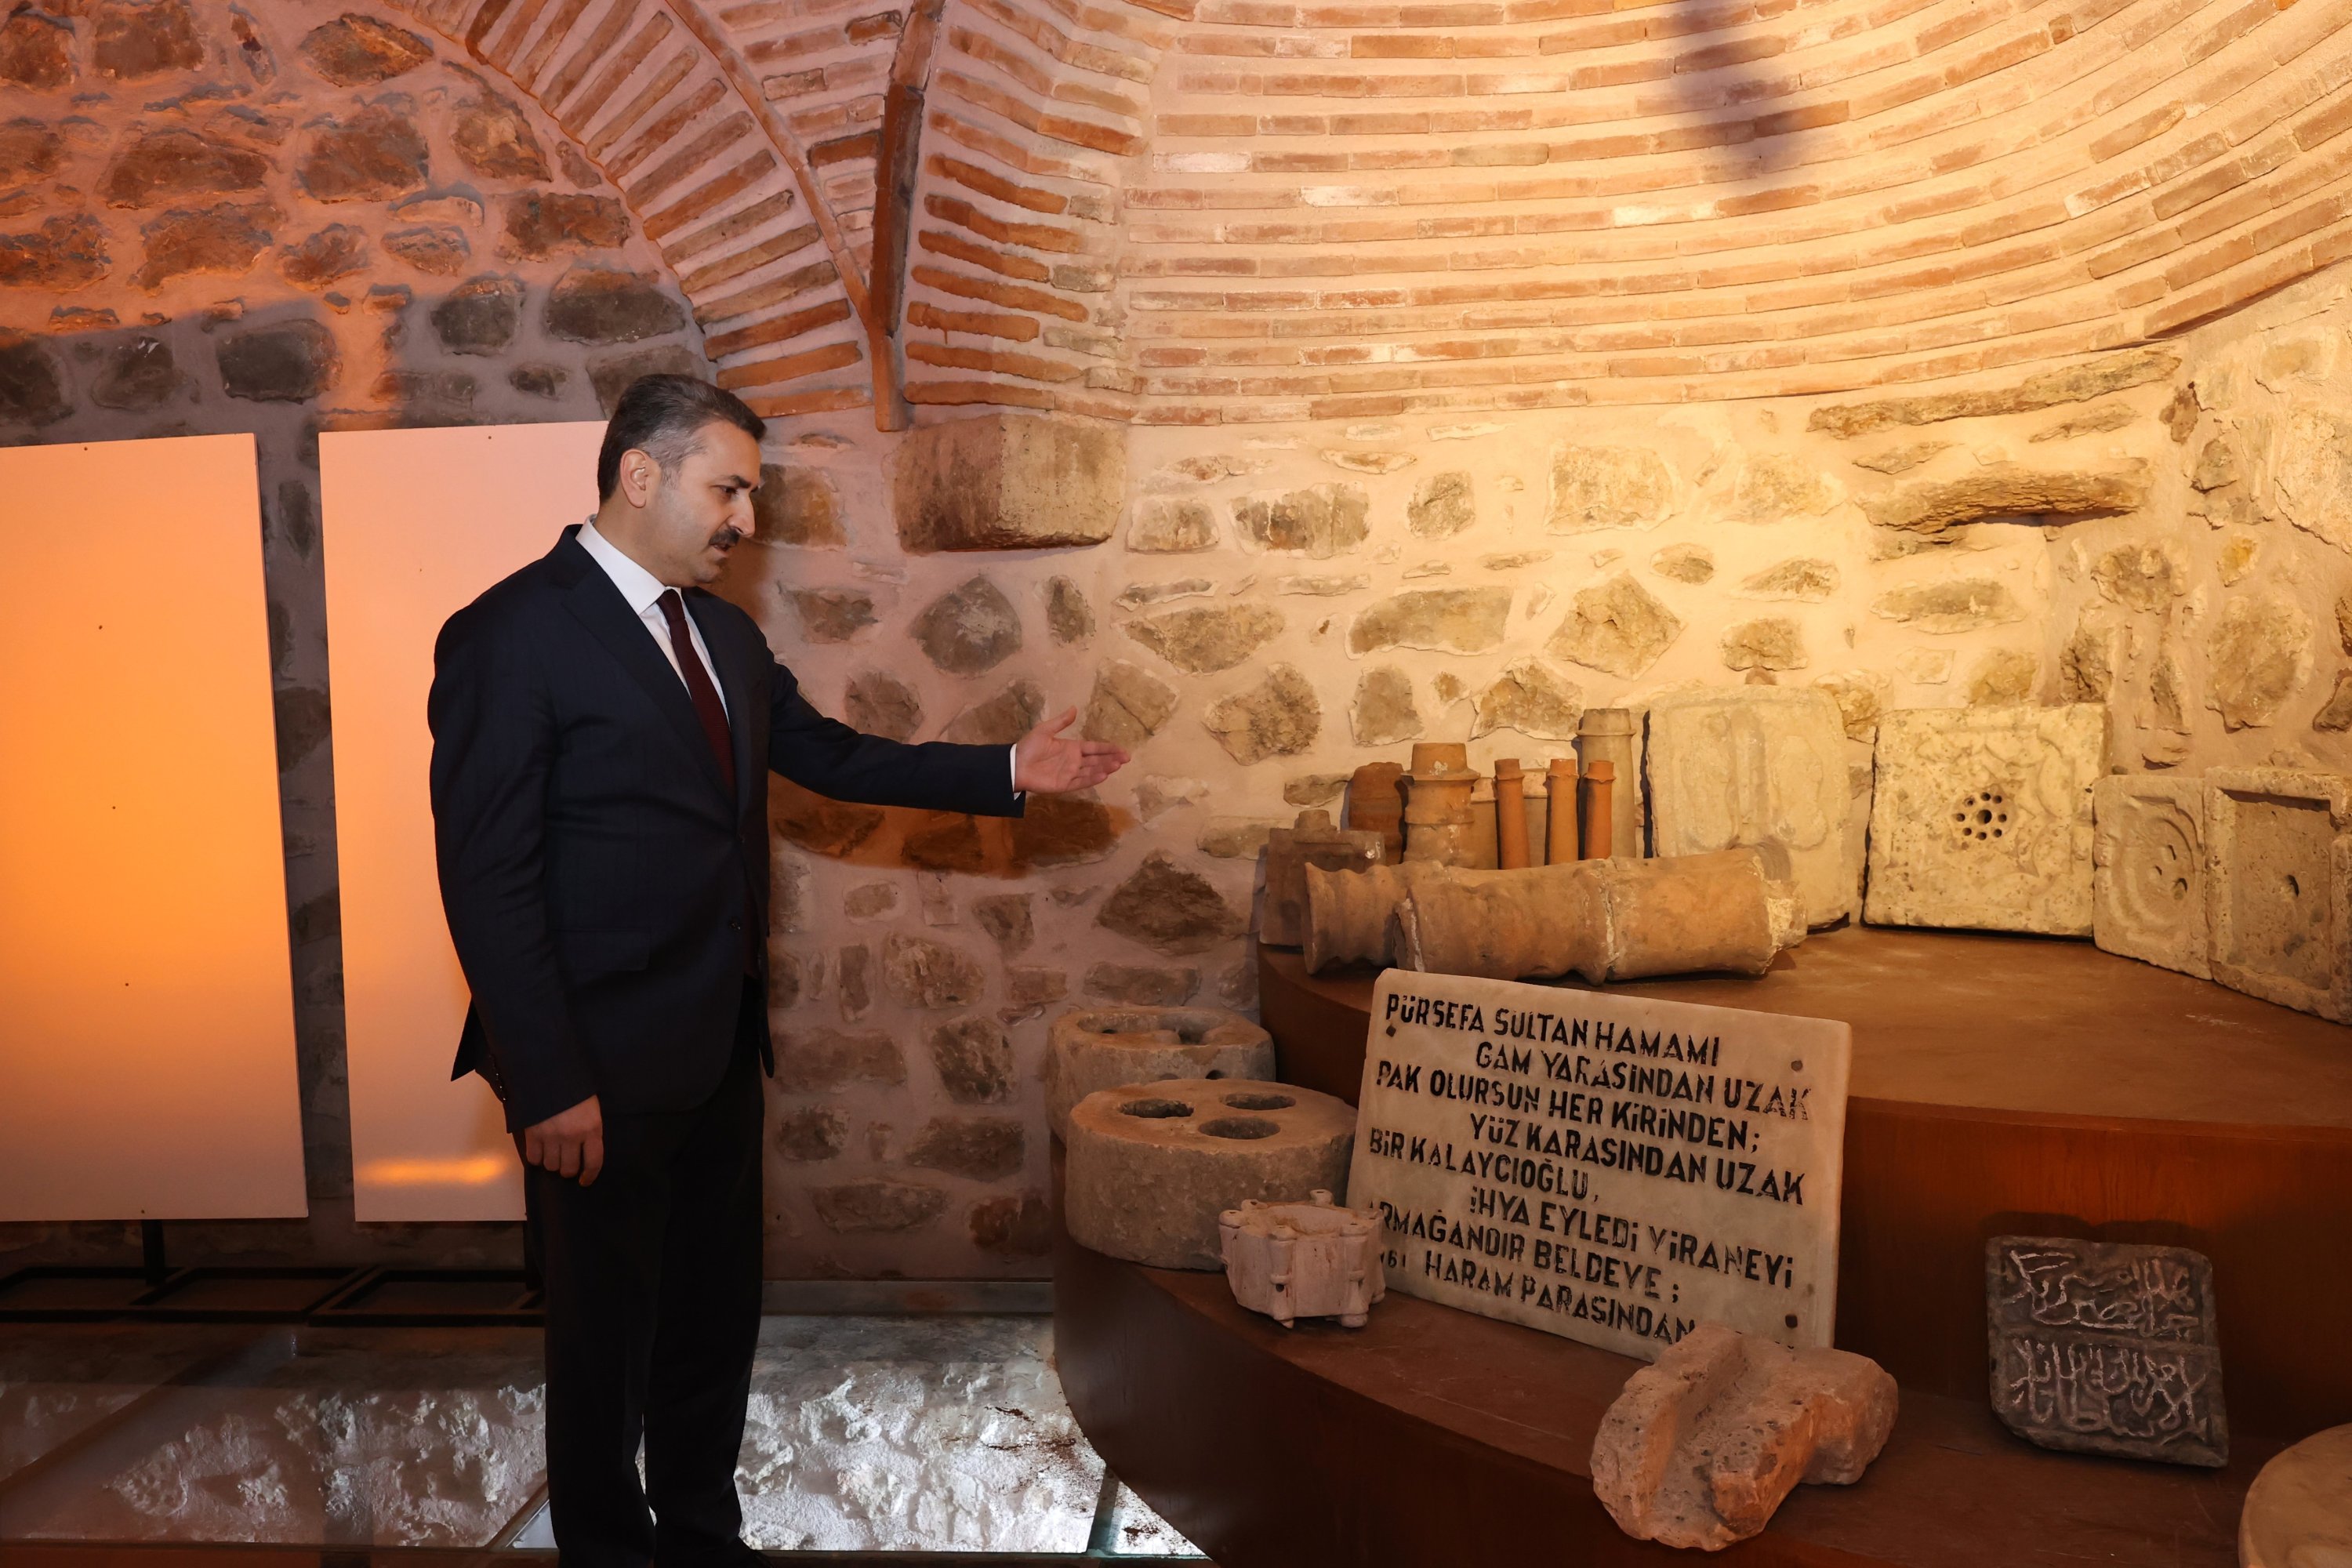 Tokat Mayor Eyüp Eroğlu visits the public toilet to be opened as the Water and Cleaning Museum, Tokat, Türkiye, Nov. 29, 2022. (IHA Photo)